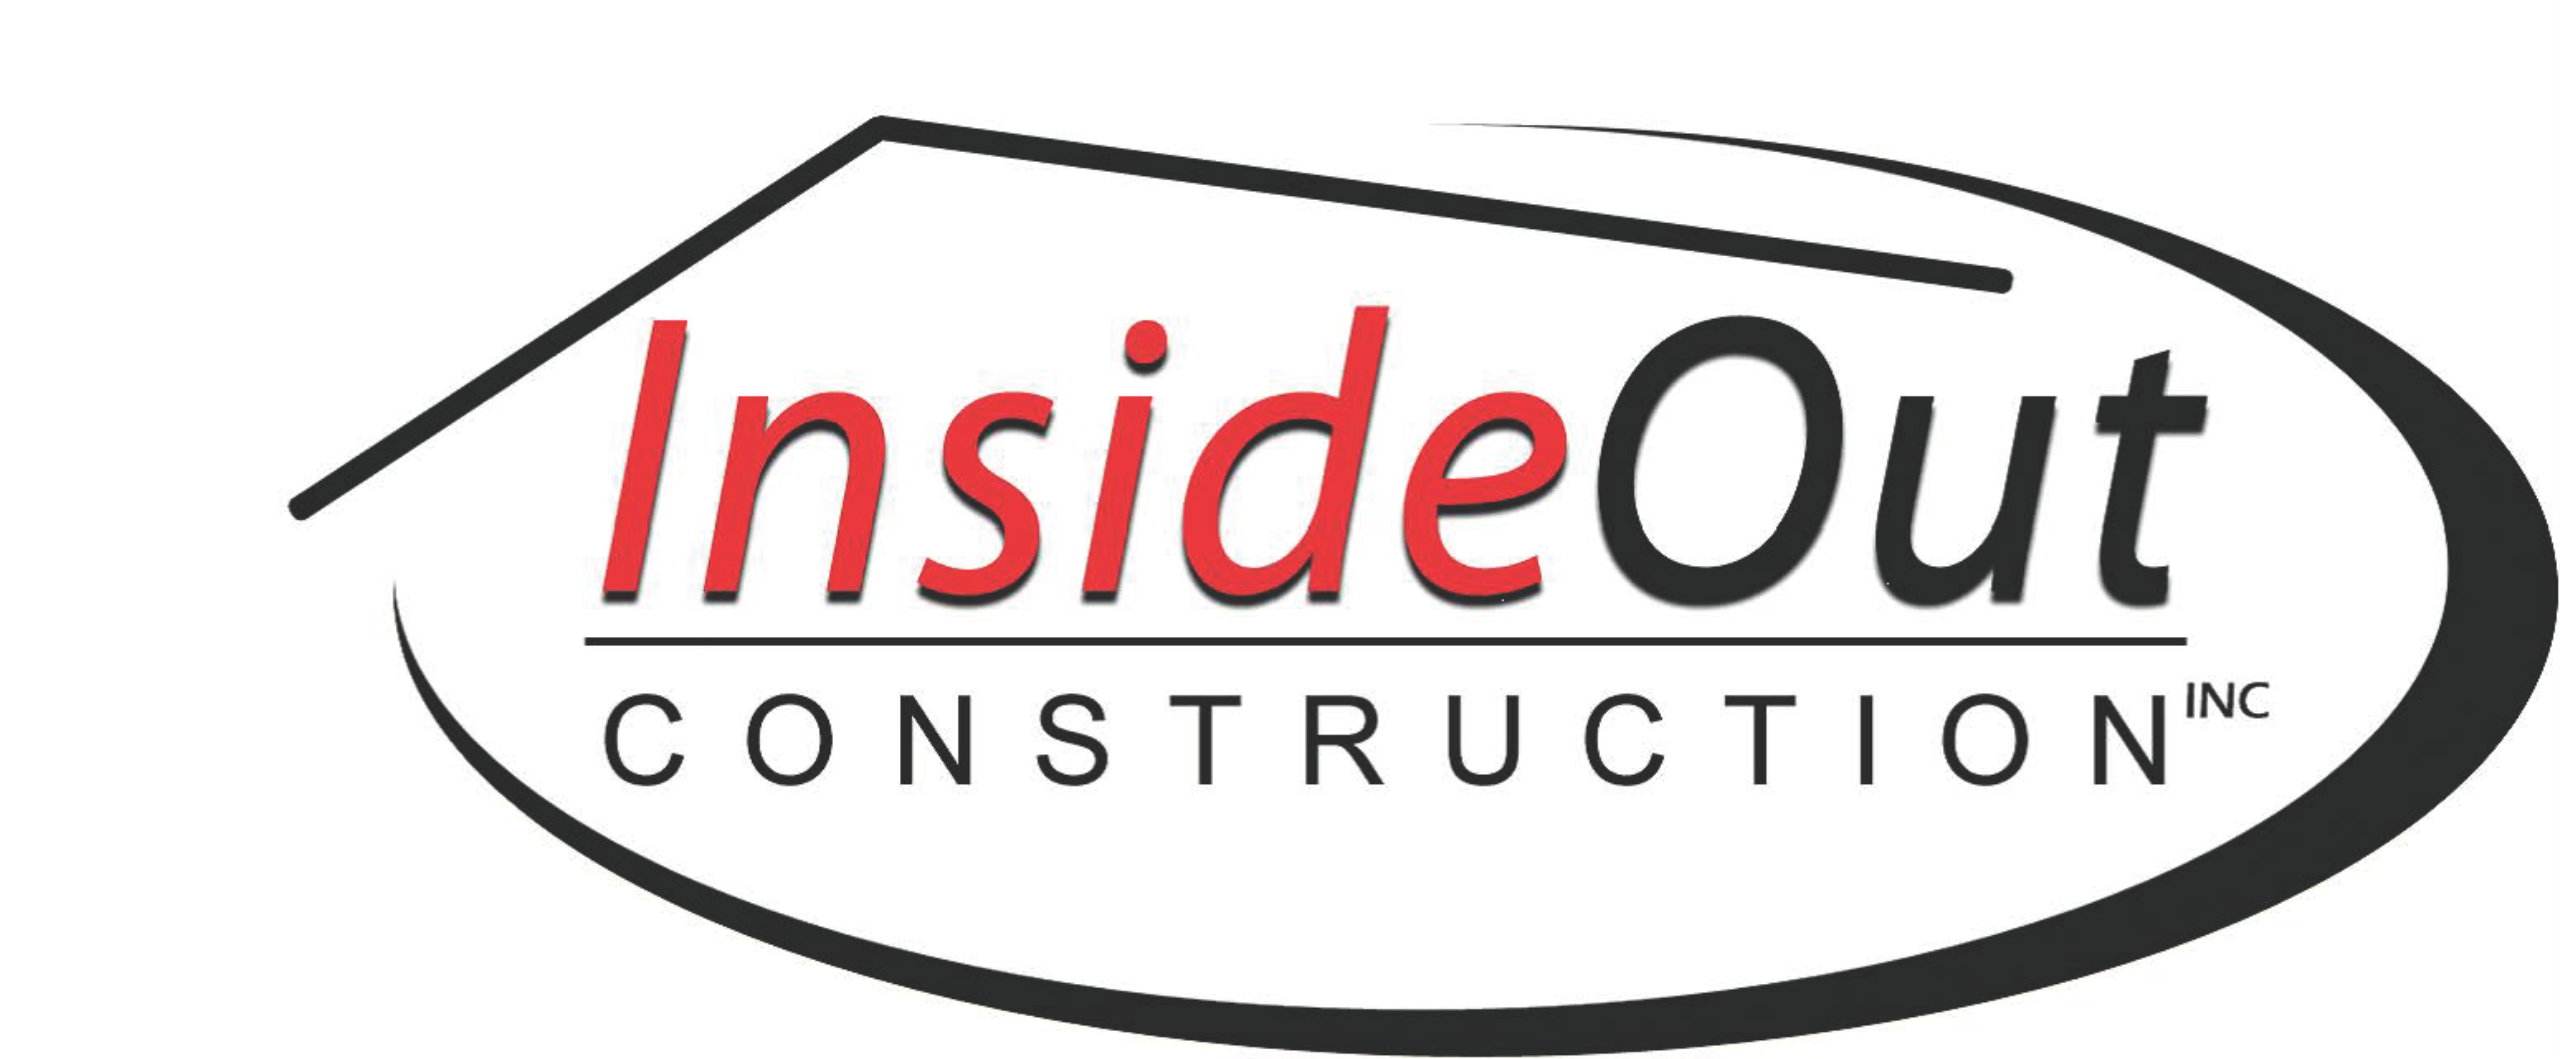 Inside Out Construction, Inc. Logo